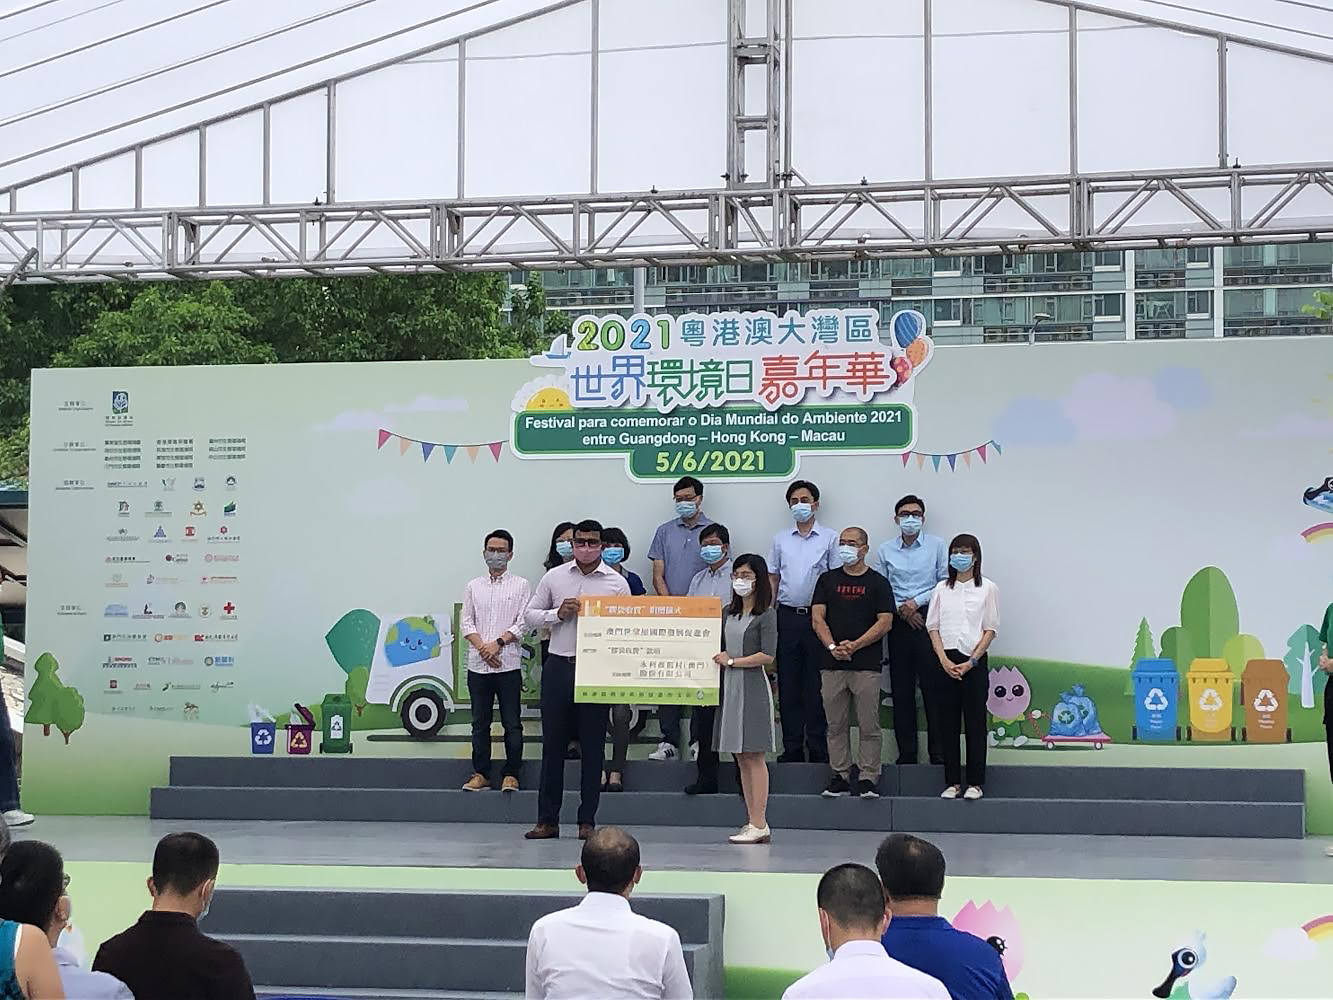 Genervision House - Arianna U at the World Environment Day 2021 - Guangdong-Hong Kong-Macao Commemoration Festival